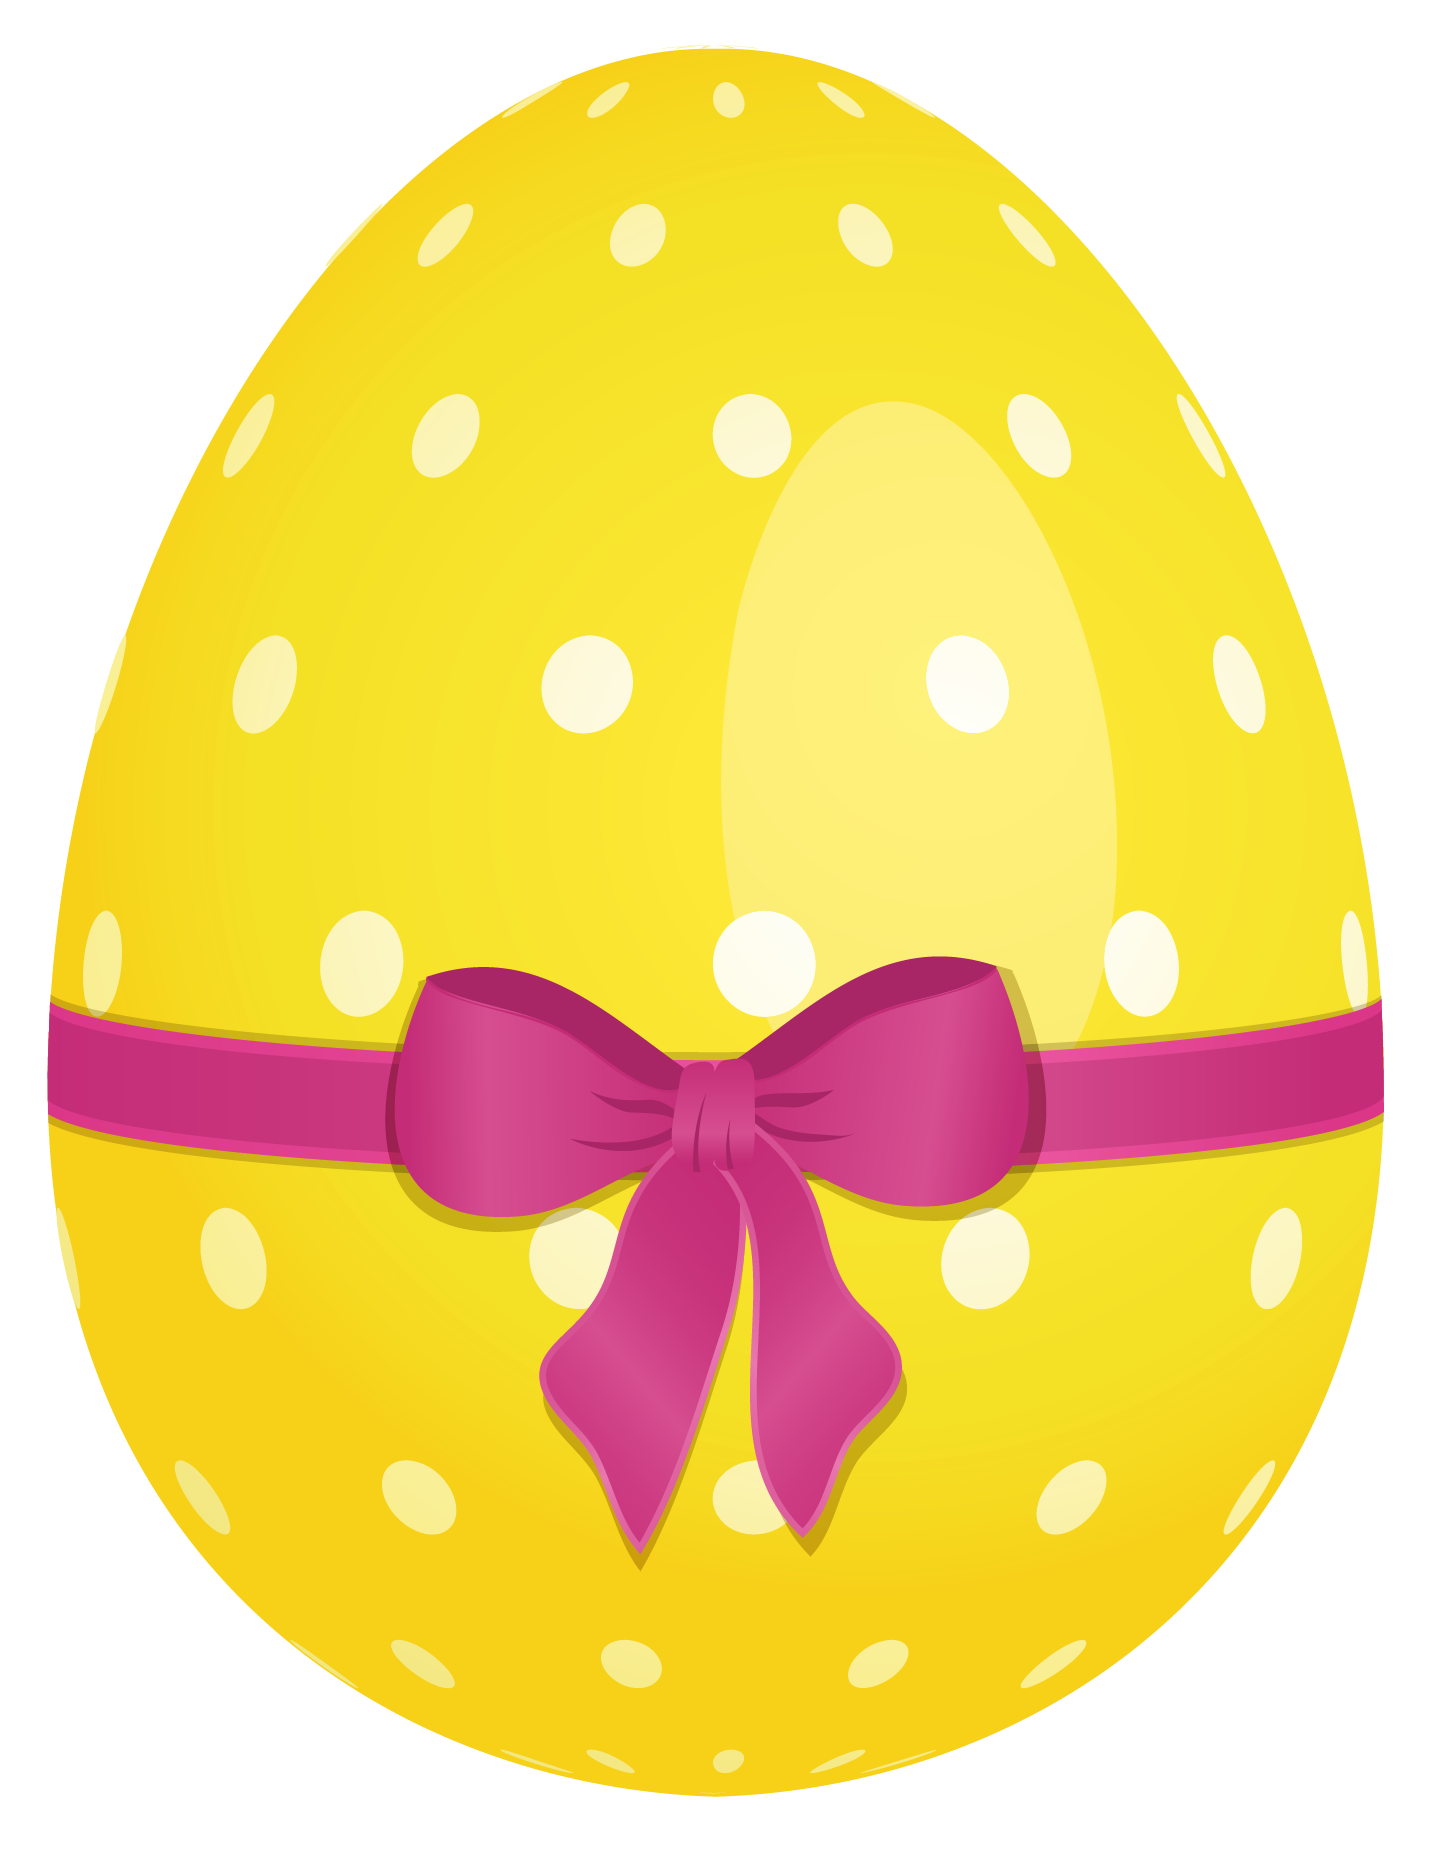 Easter eggs clip art image - Cliparting.com